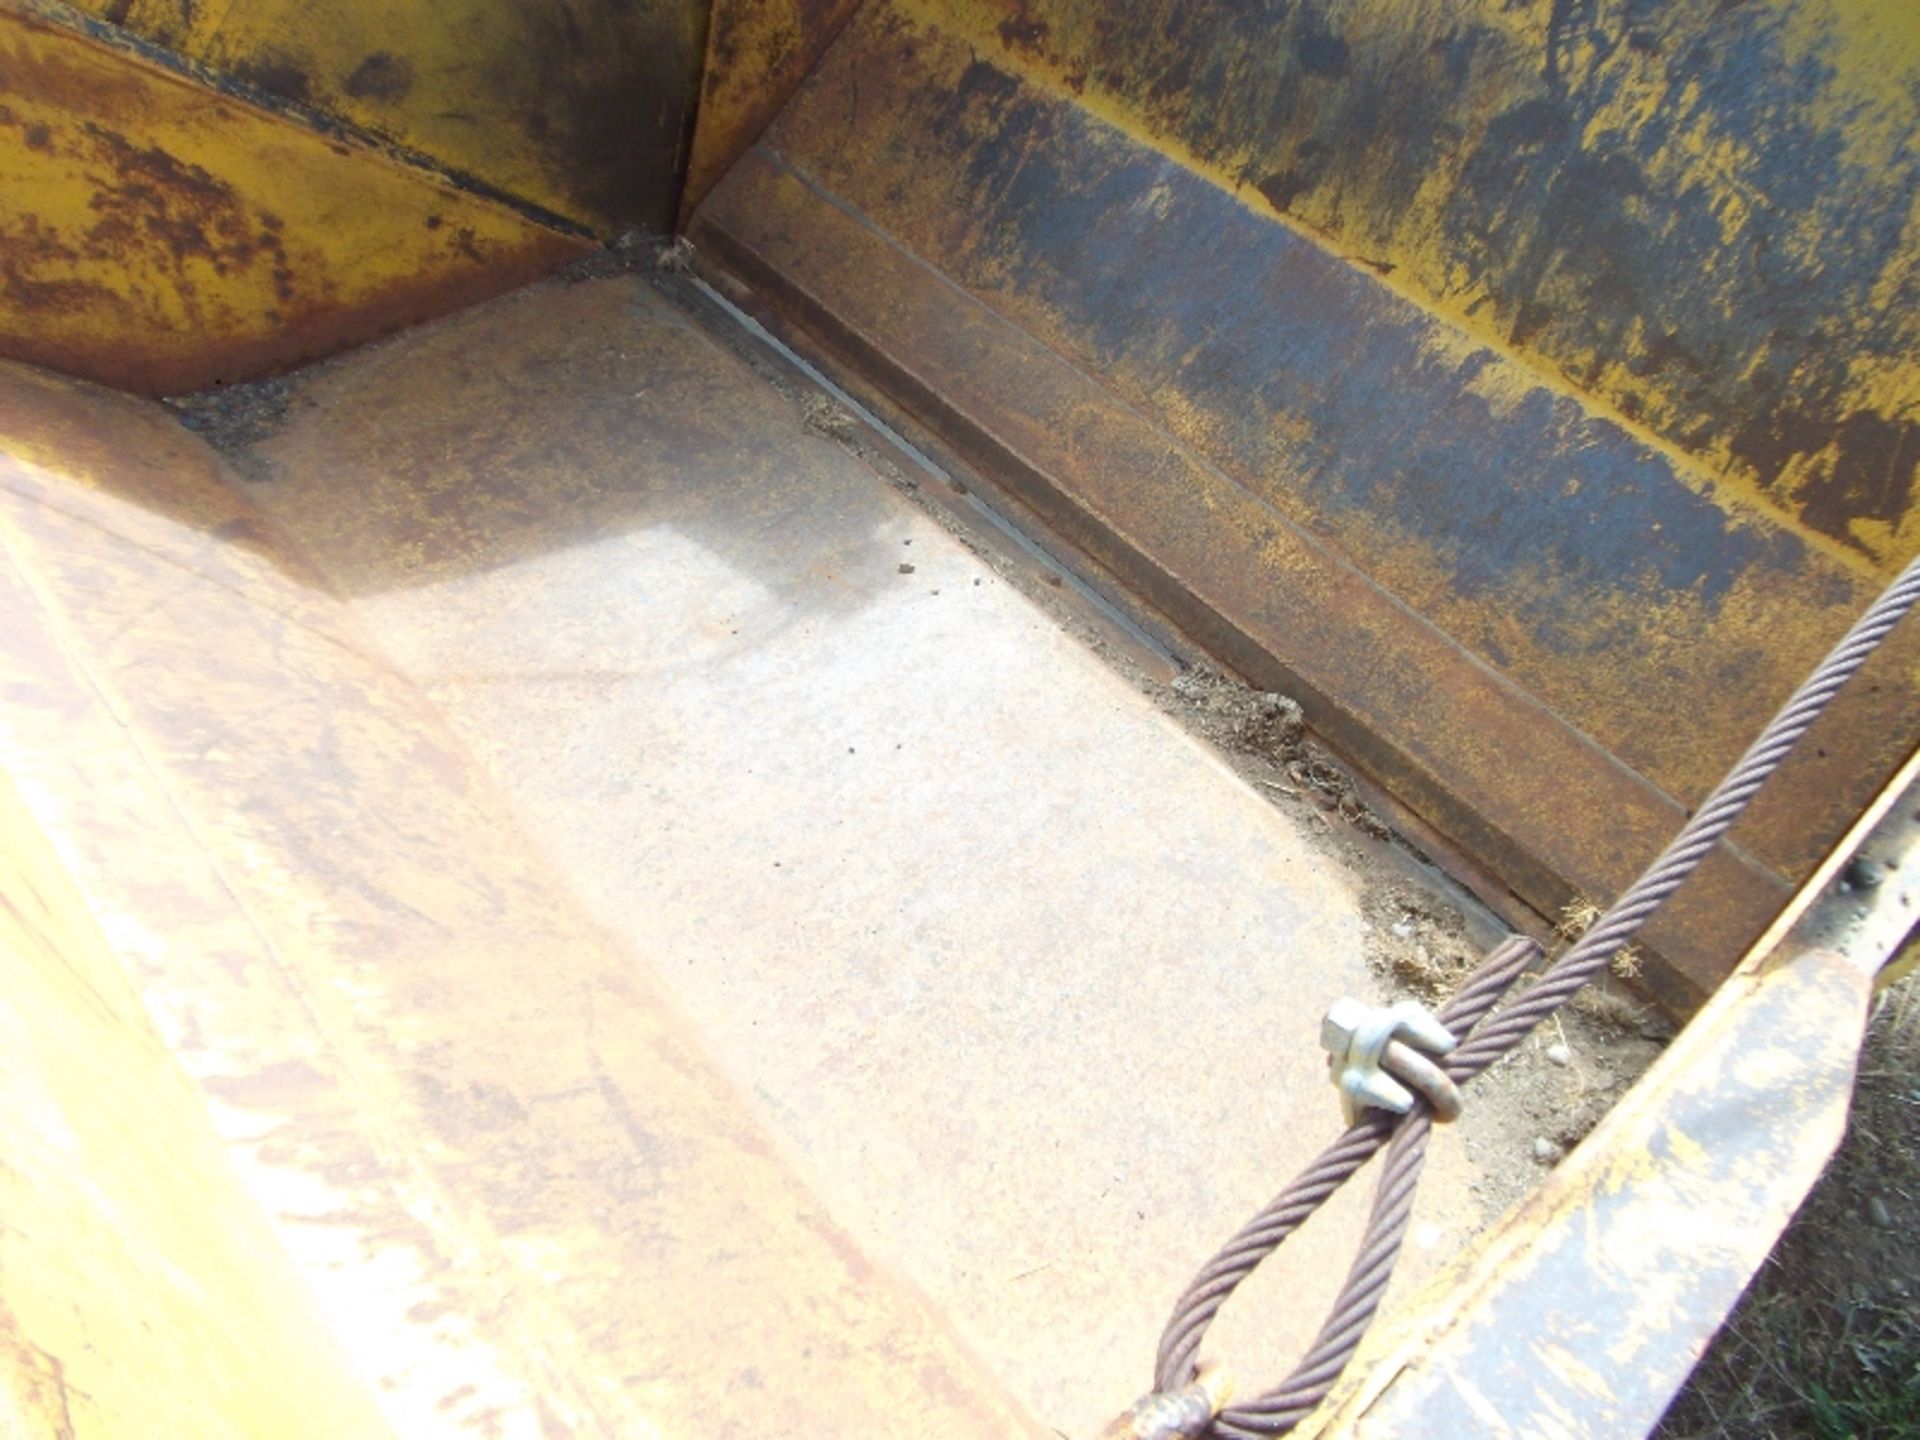 Aetco 6 yard hyd cable scraper - Image 4 of 4